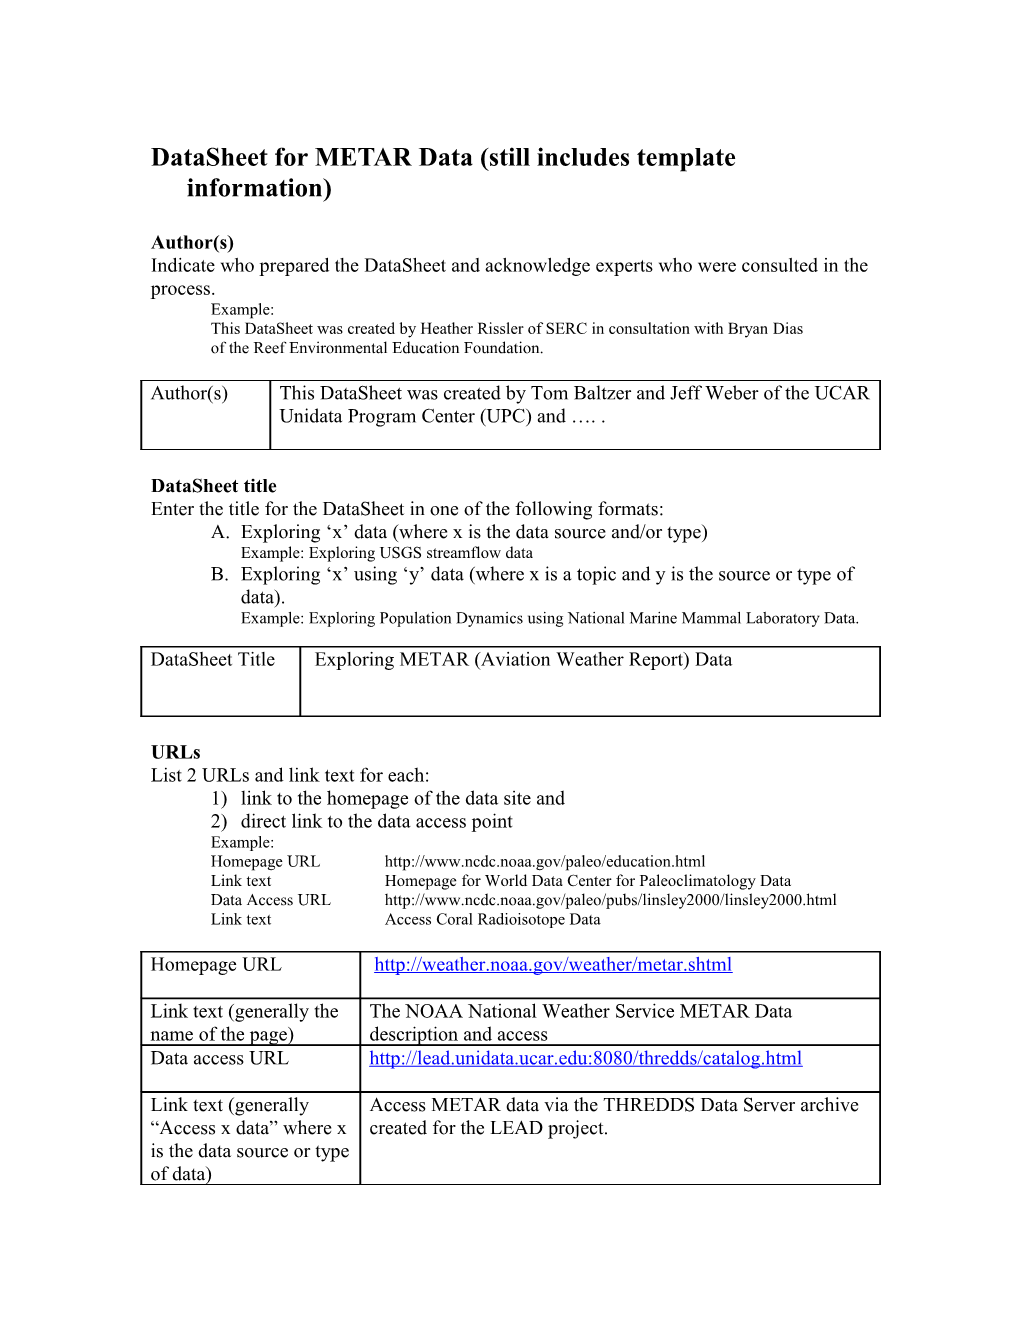 Datasheet for METAR Data (Still Includes Template Information)